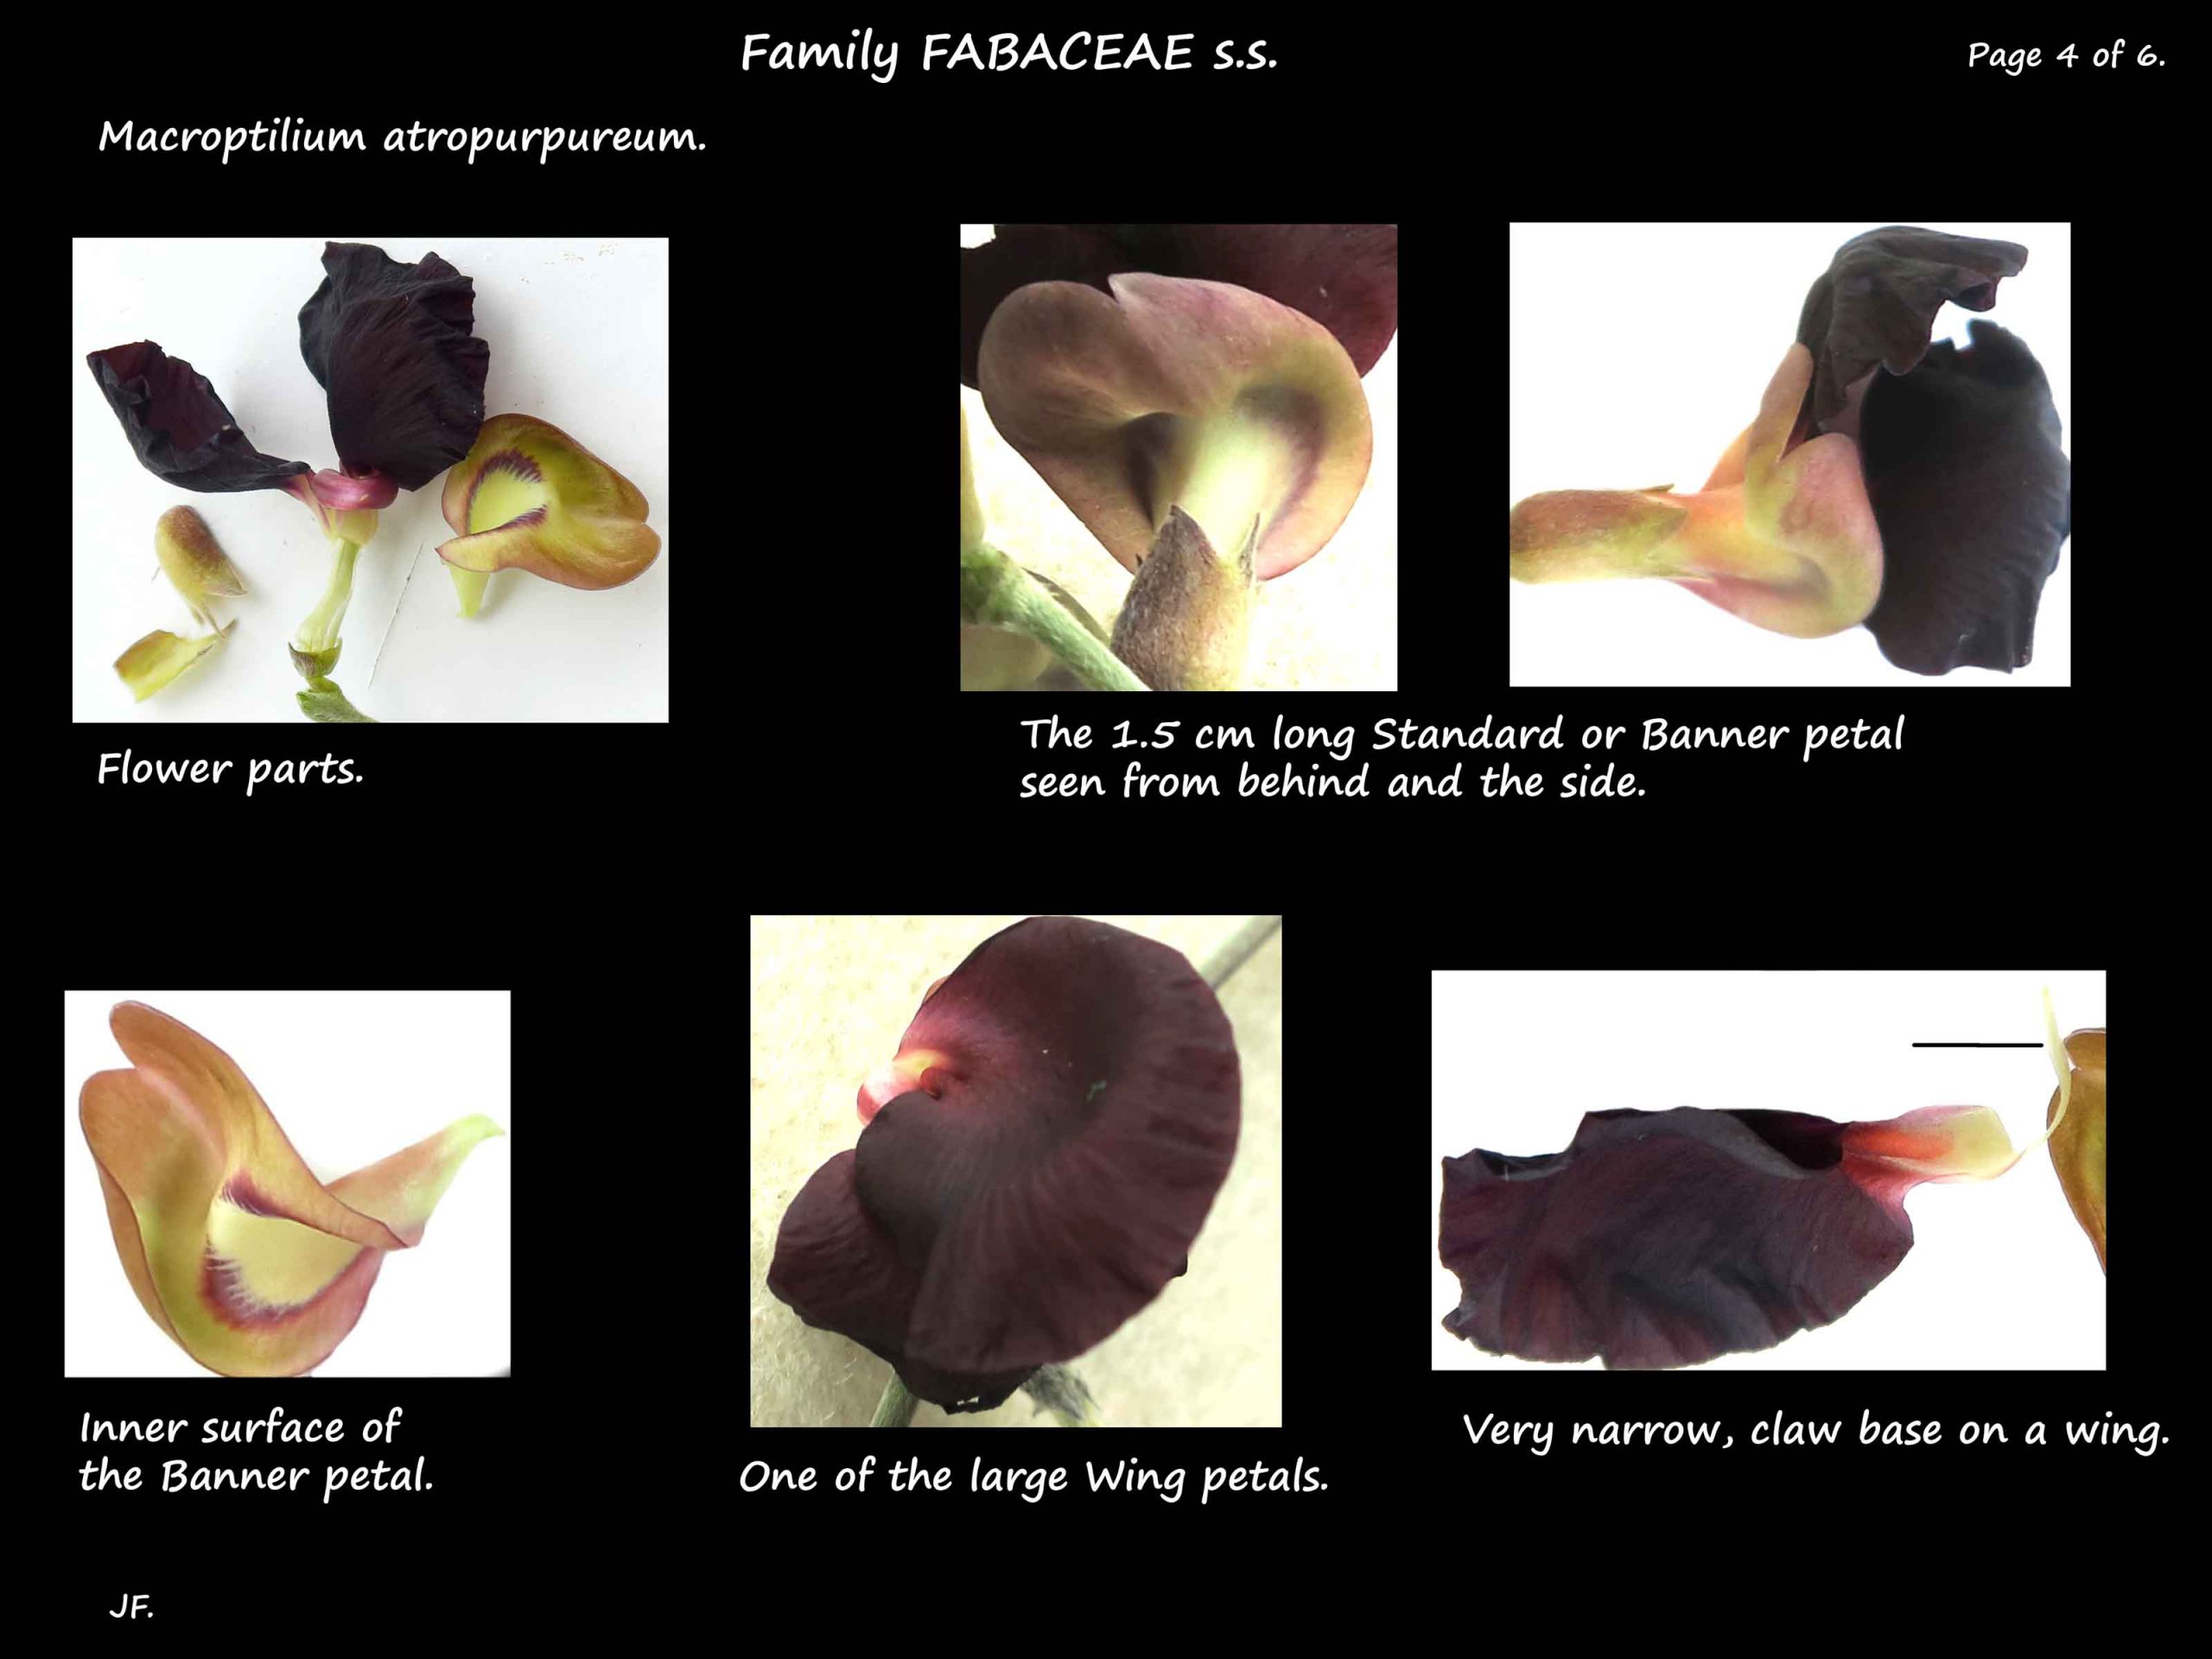 4 Wing & banner petals of Macroptilium